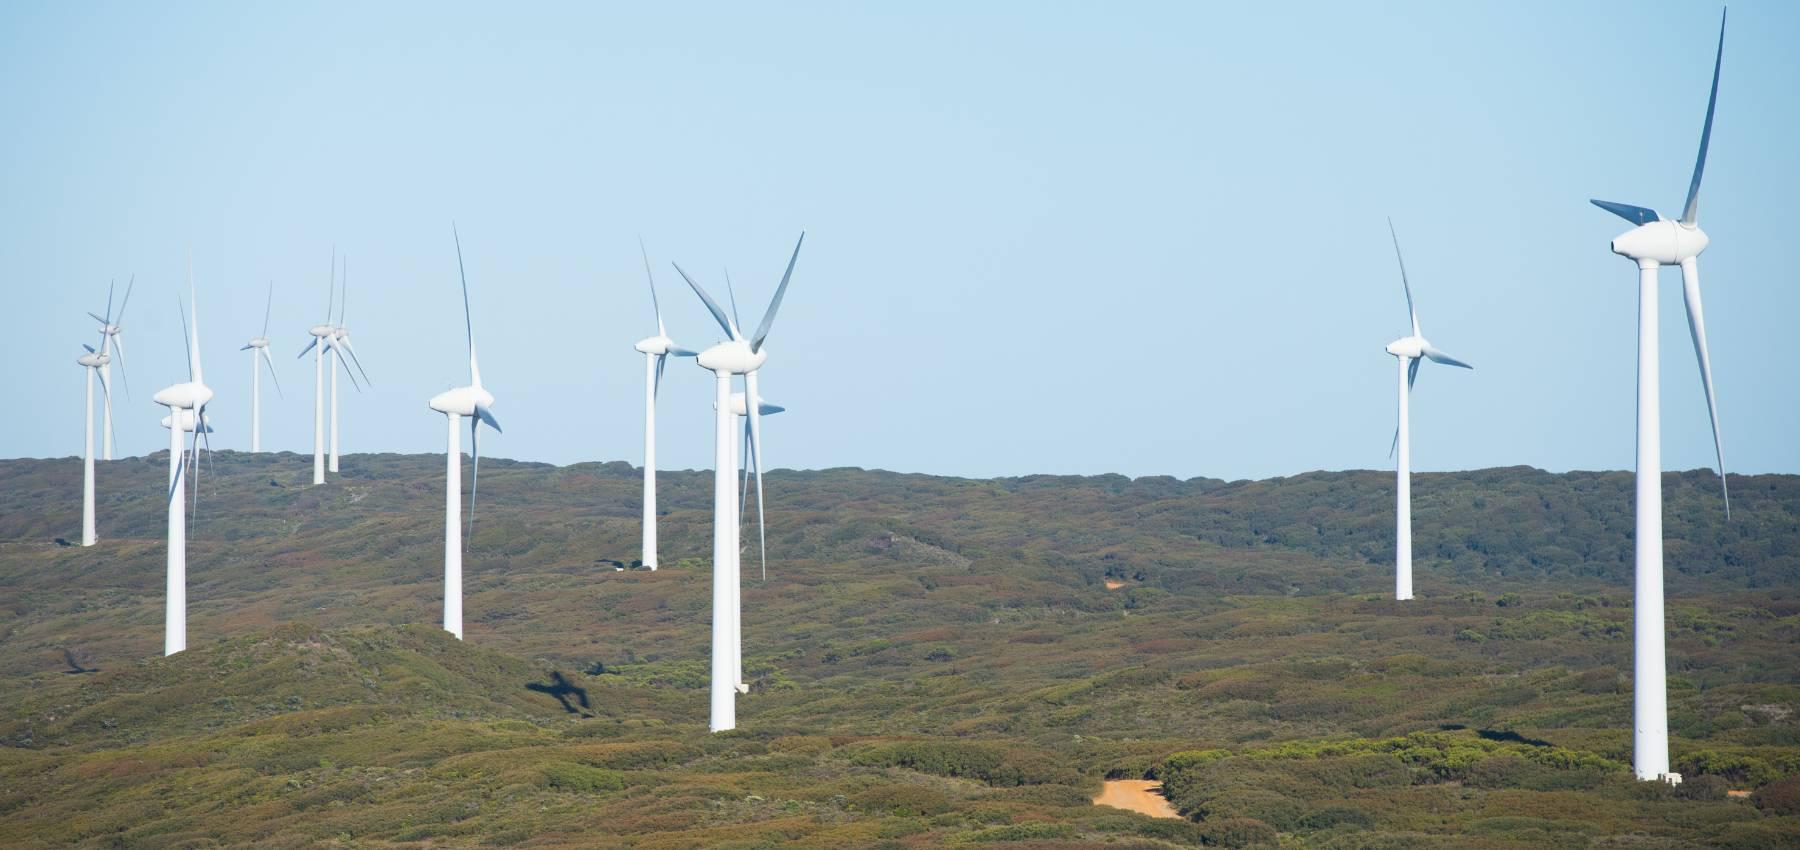 A wind farm of wind turbine generators standing amongst green vegetation.